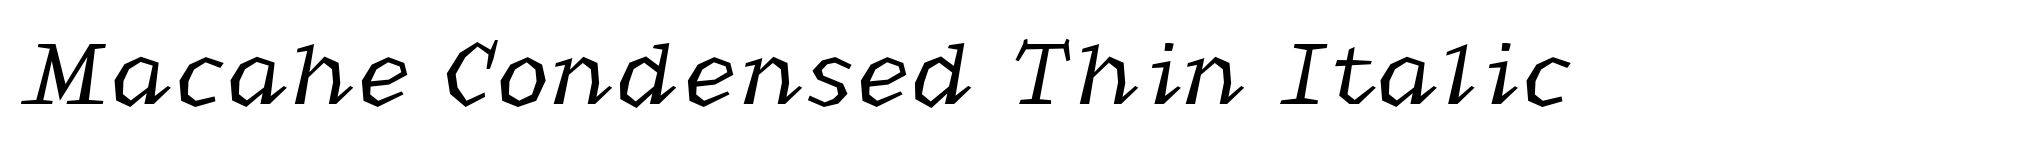 Macahe Condensed Thin Italic image